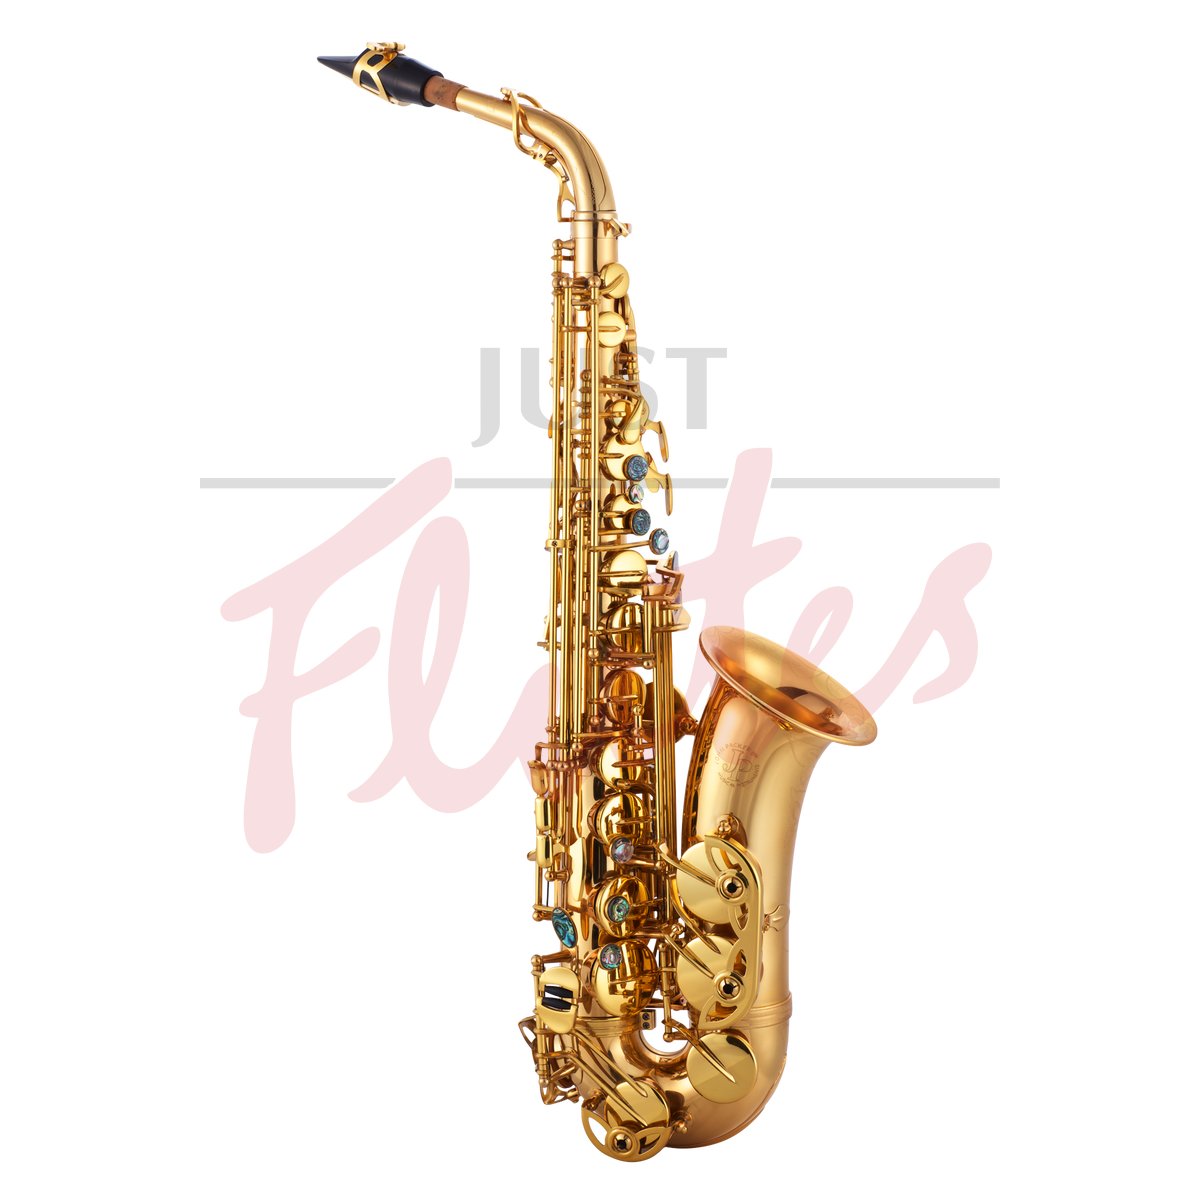 JP045G Alto Saxophone, Gold Lacquered